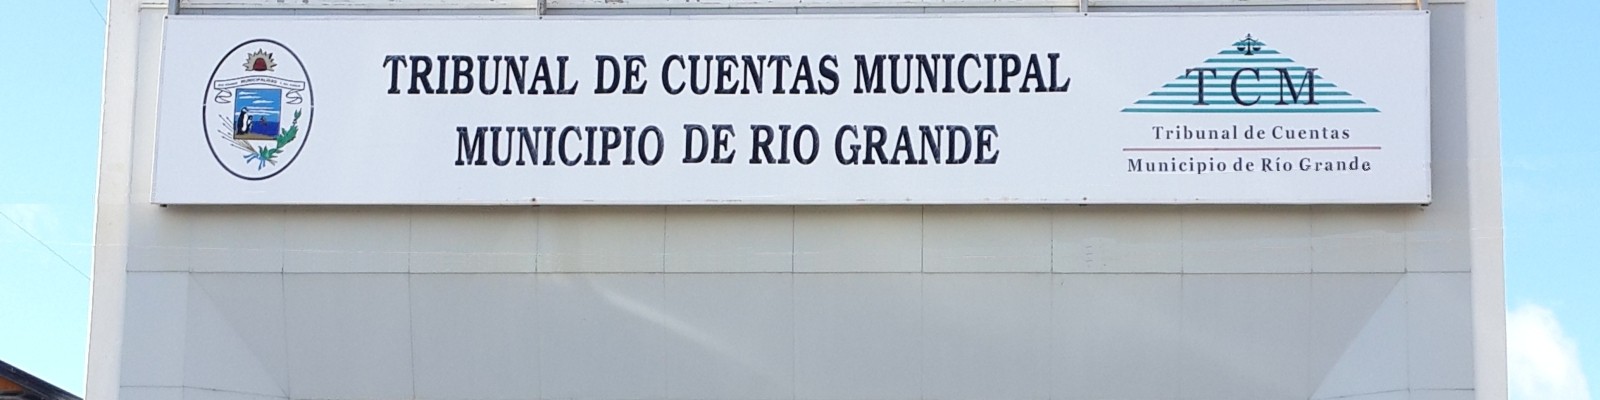 Tribunal de Cuentas Municipal – Municipio de Rio Grande